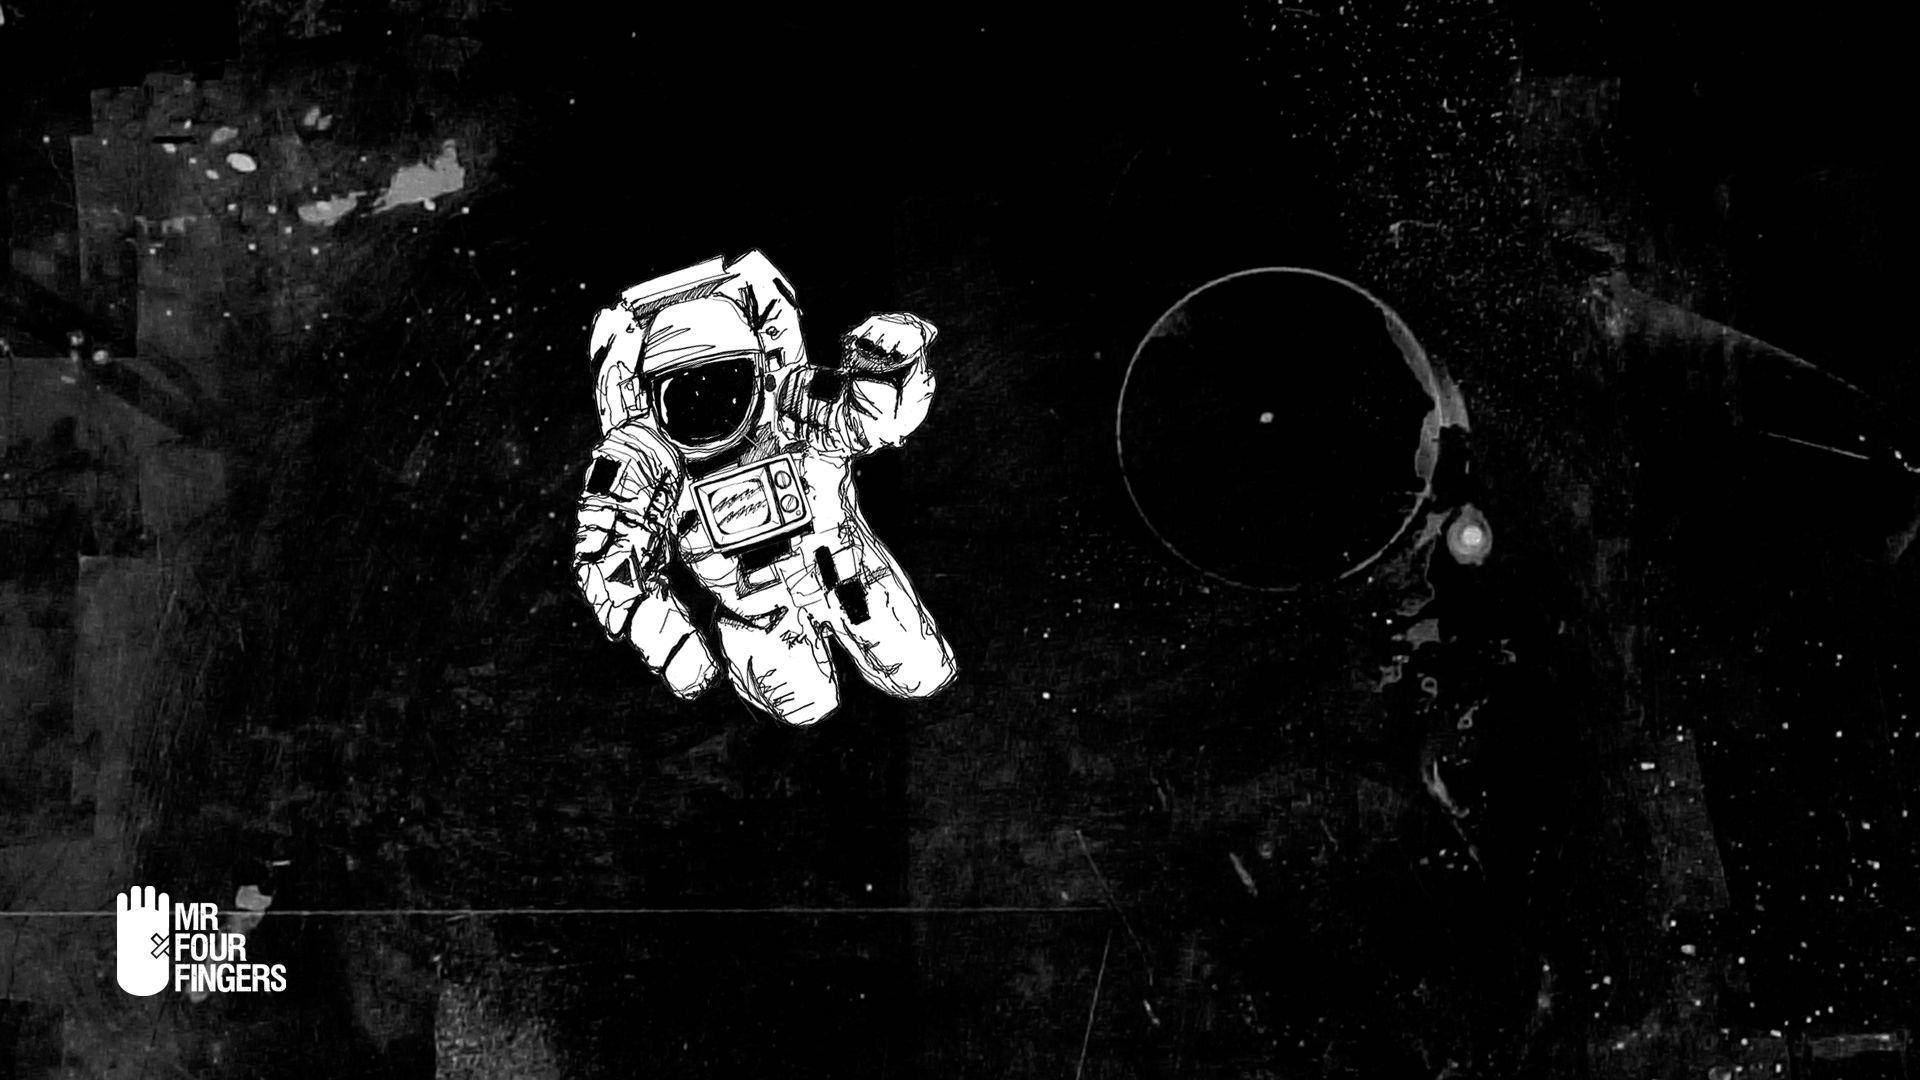 Amazing Image Of Nasa Spaceman